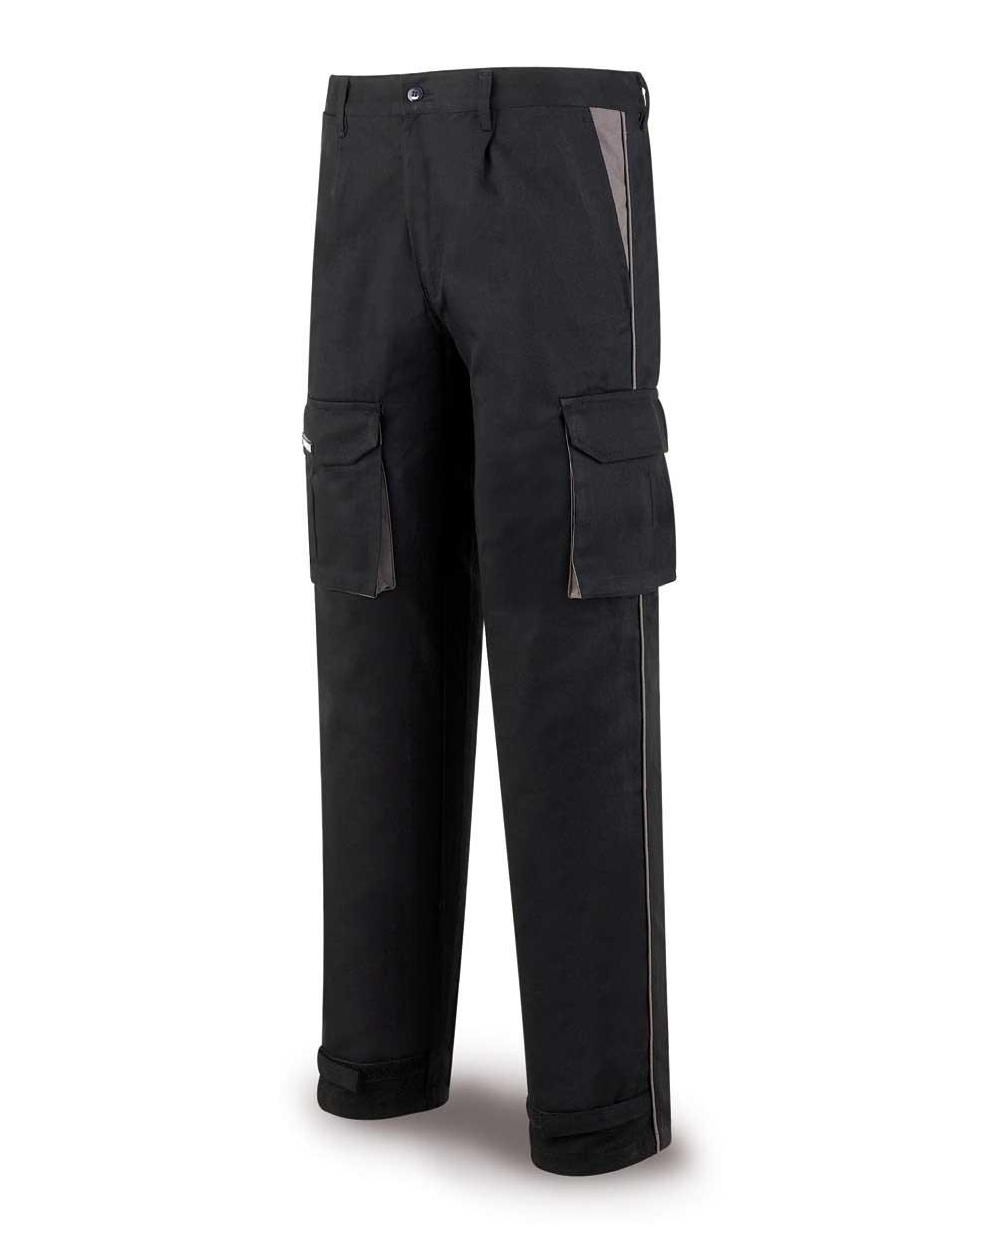 Comprar Pantalón Algodón Supertop Negro 488-Pn Suptop barato